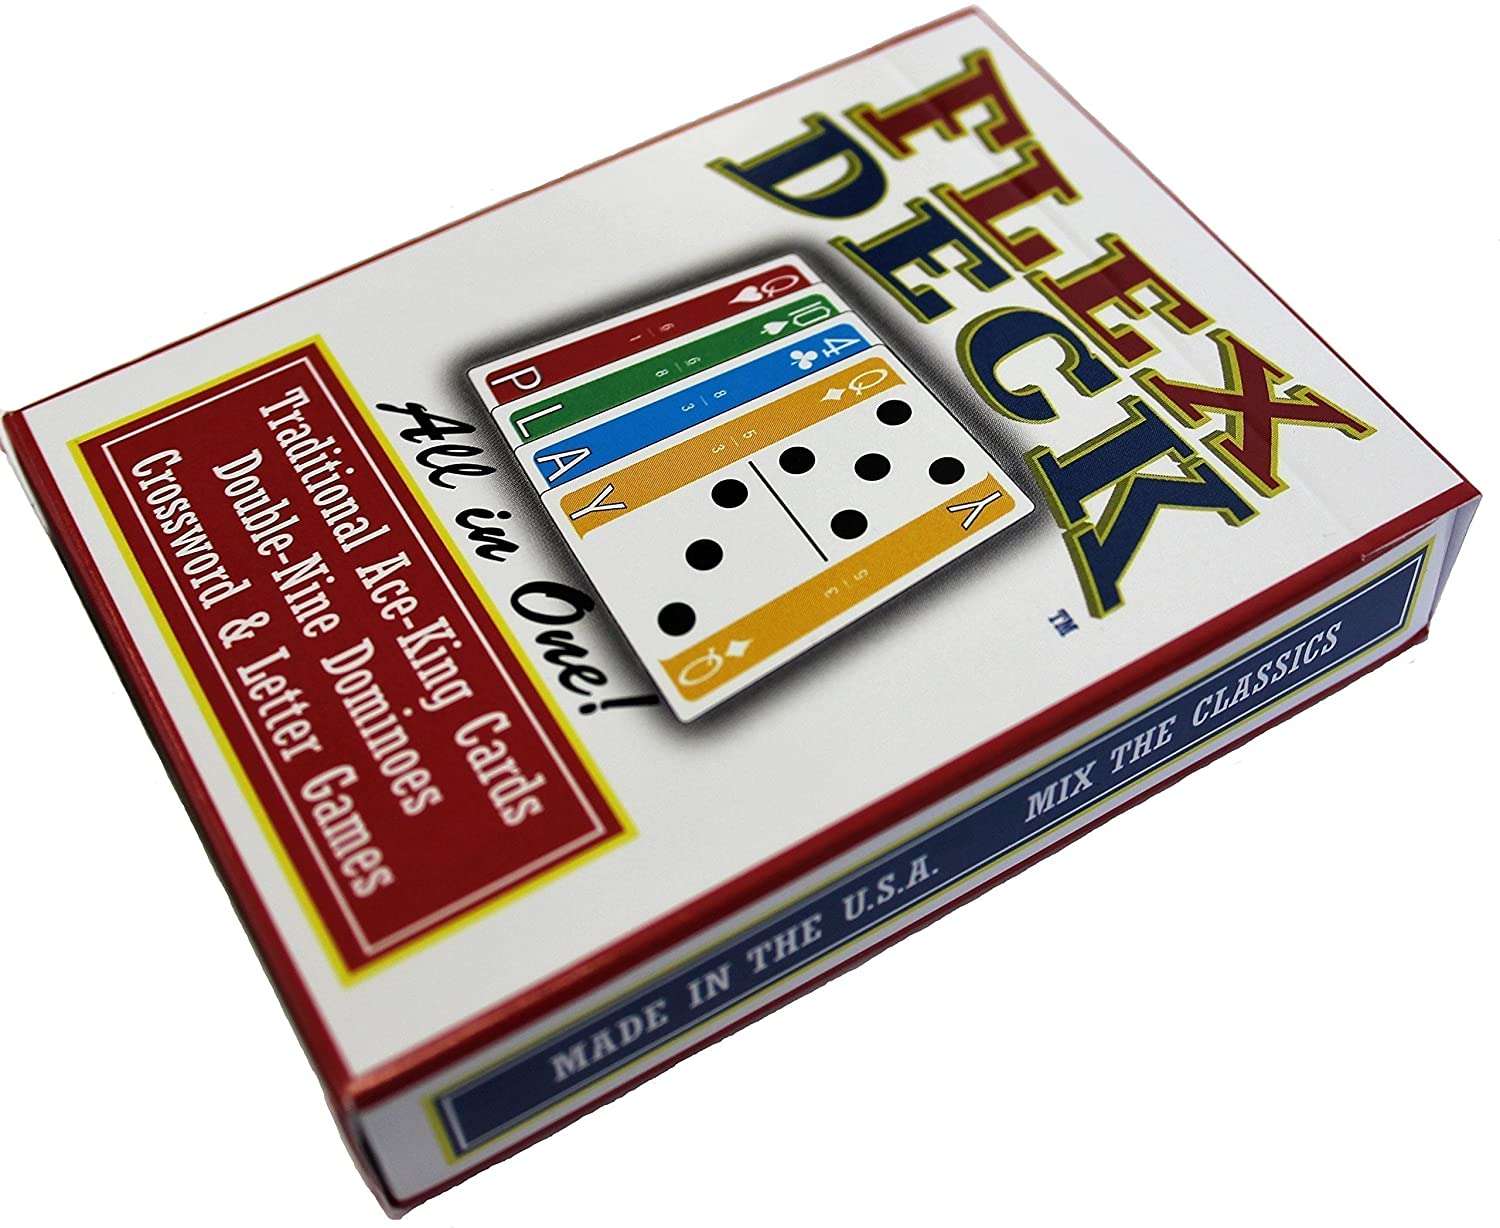 PlayingCardDecks.com-Flex Deck Original Domino Playing Cards USPCC